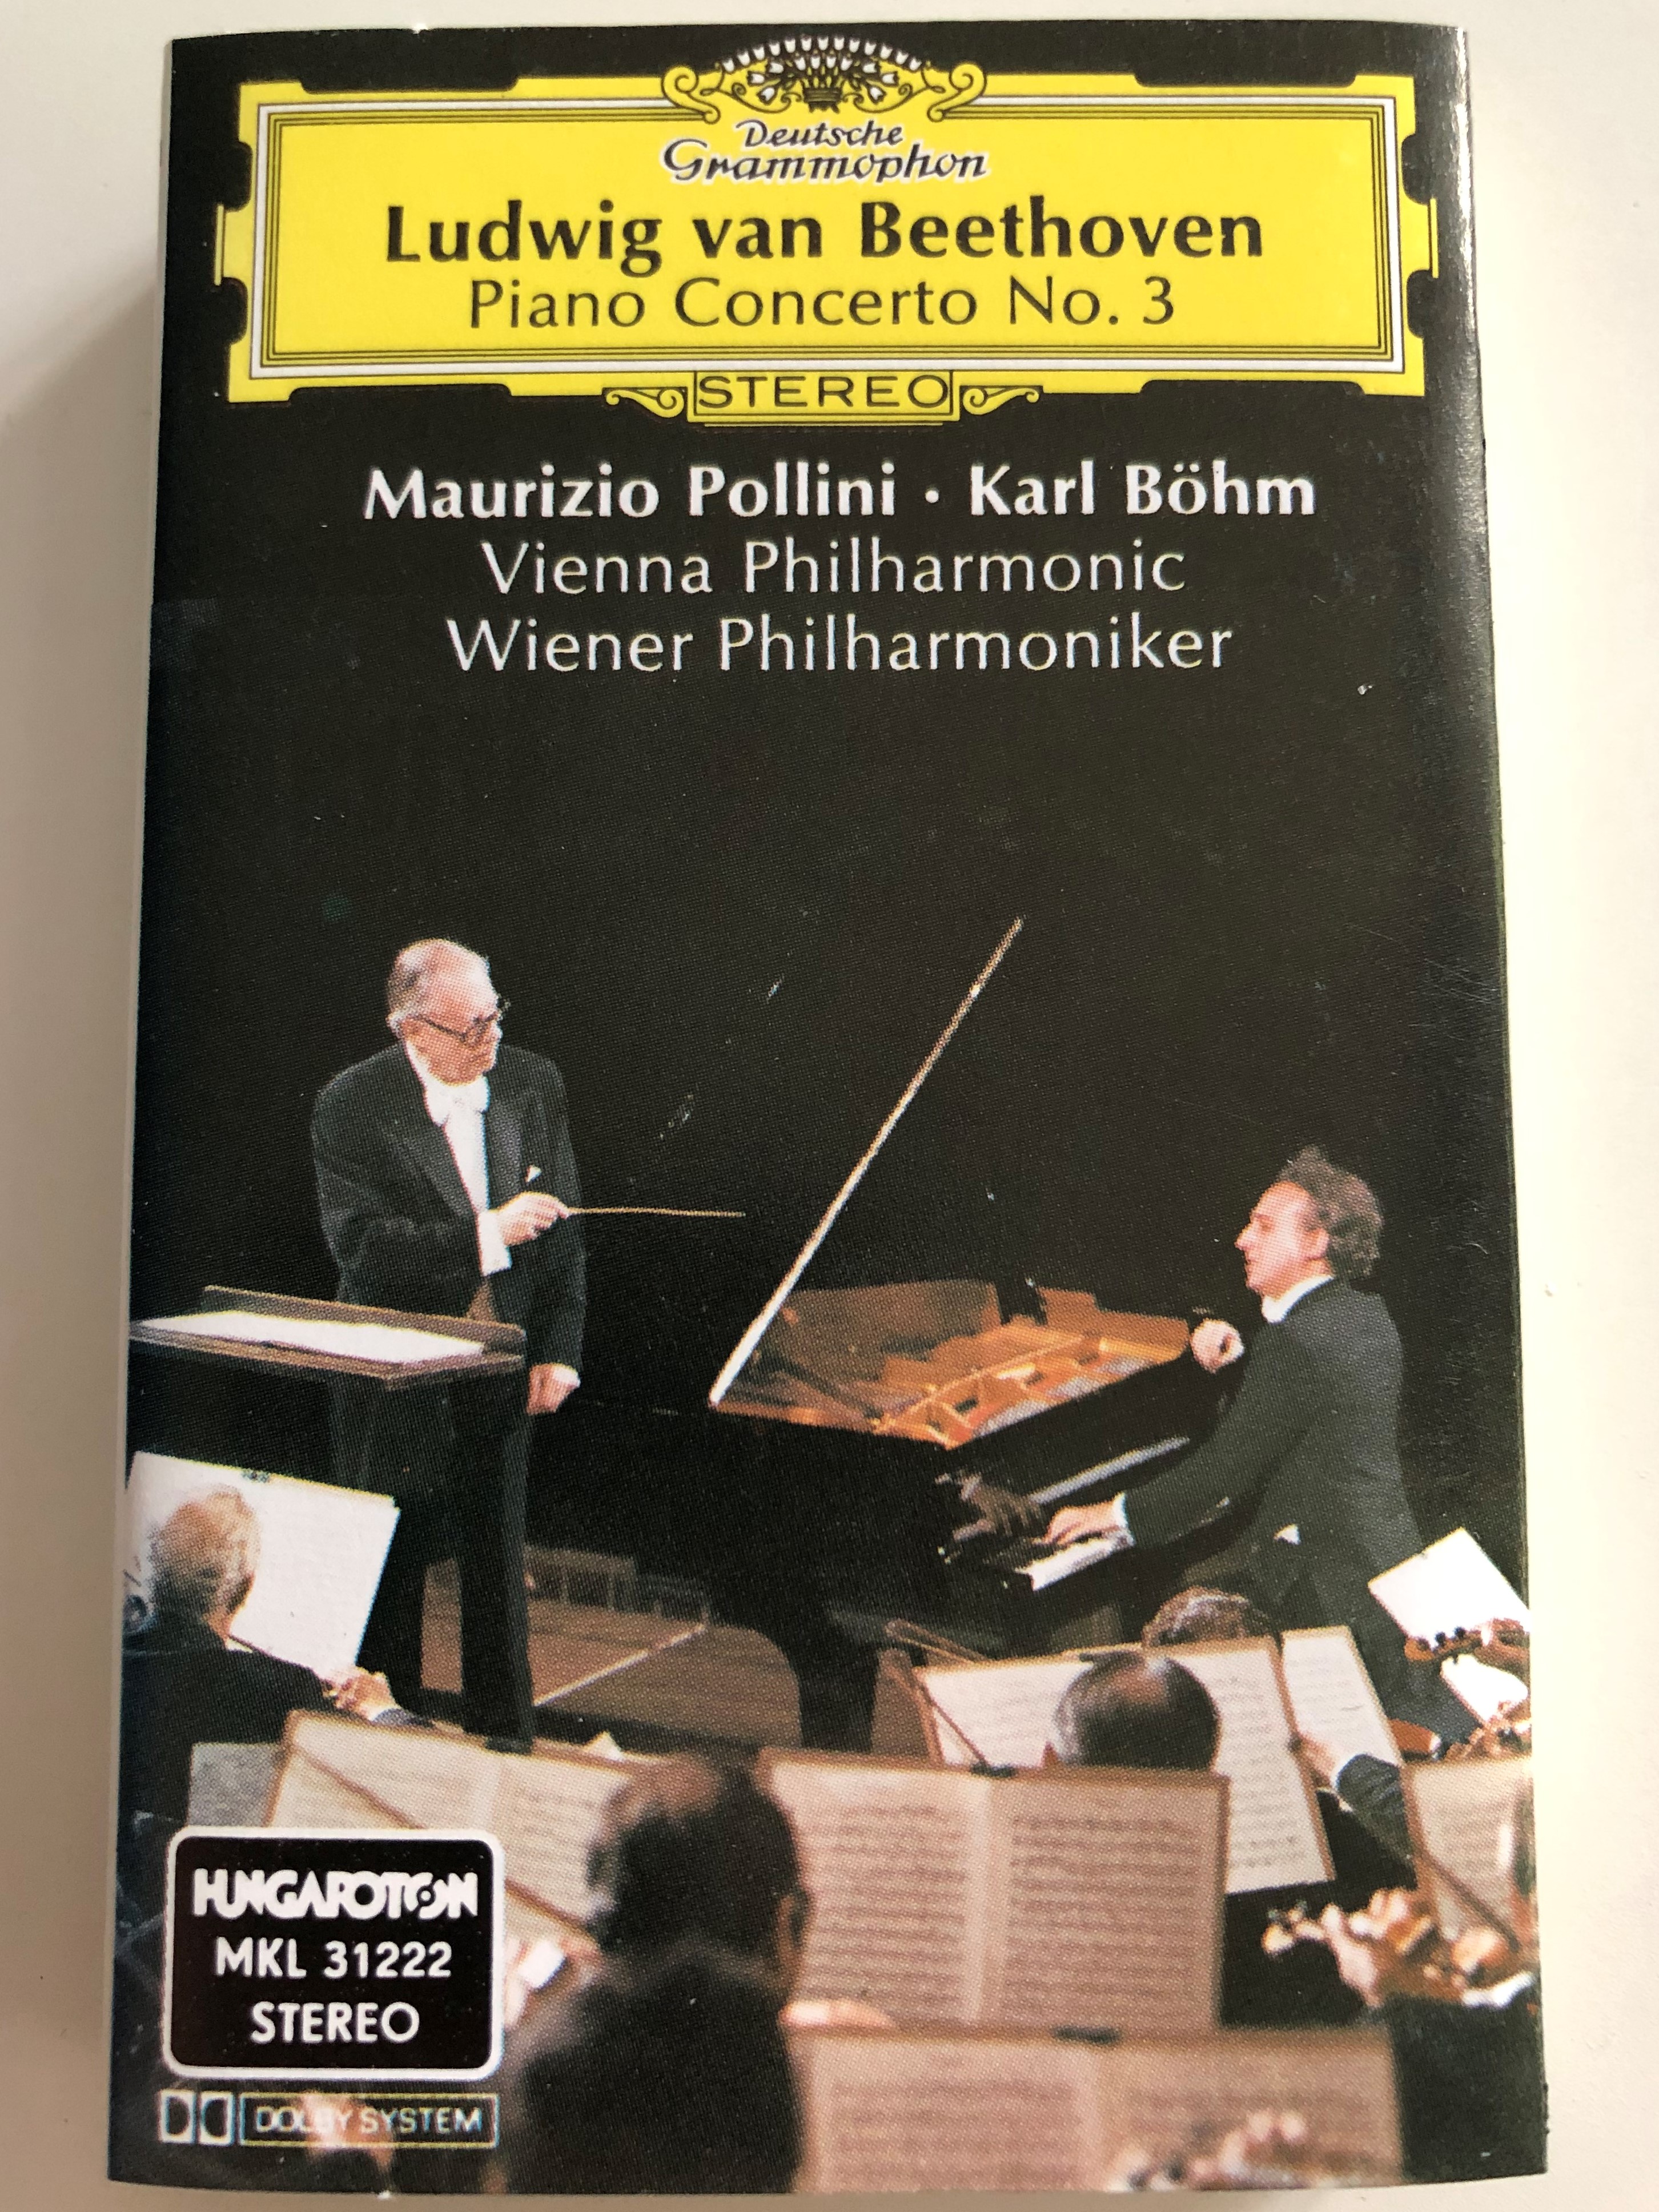 ludwig-van-beethoven-piano-concerto-no.3-maurizio-pollini-karl-b-hm-vienna-philharmonic-wienner-philharmoniker-deutsche-grammophon-cassette-stereo-mkl-31222-1-.jpg